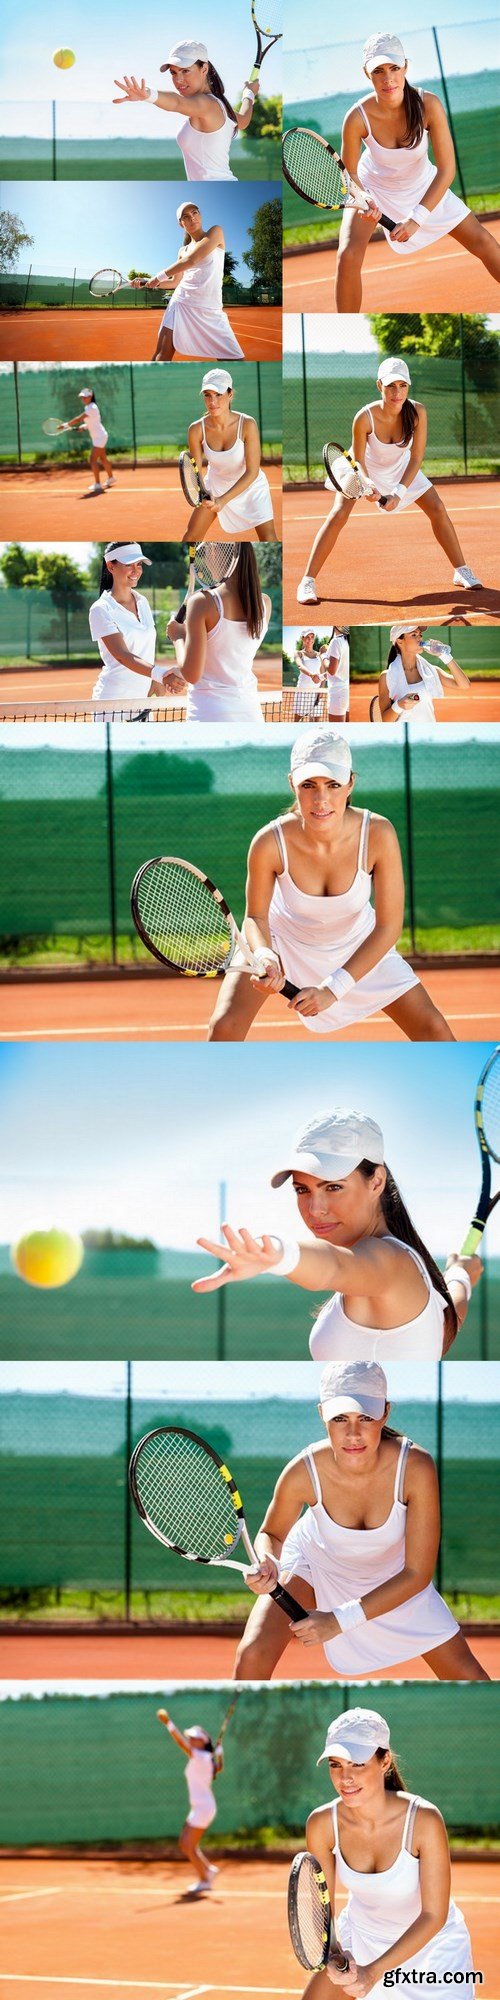 Tennisgirl - 12 UHQ JPEG